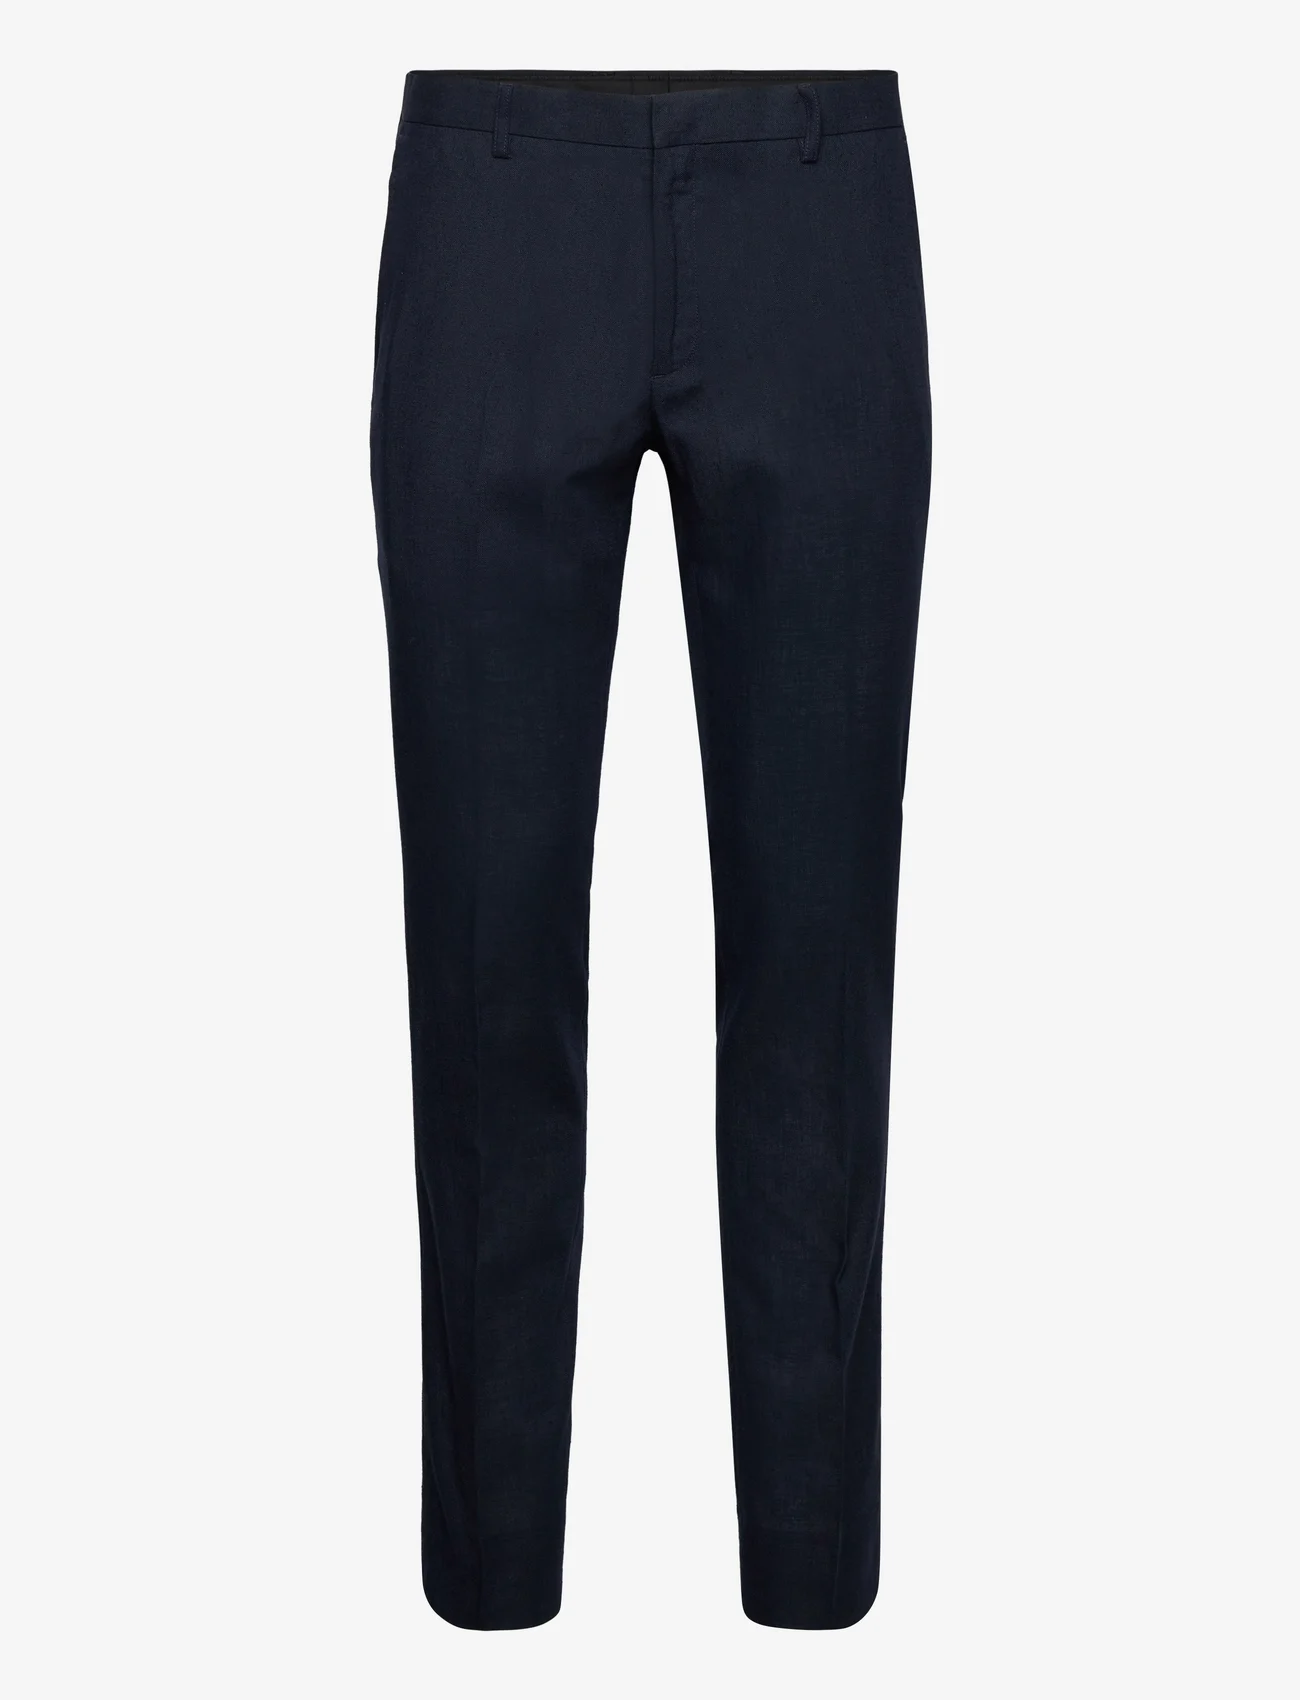 Bruun & Stengade - BS Pollino Classic Fit Suit Pants - lina bikses - navy - 0